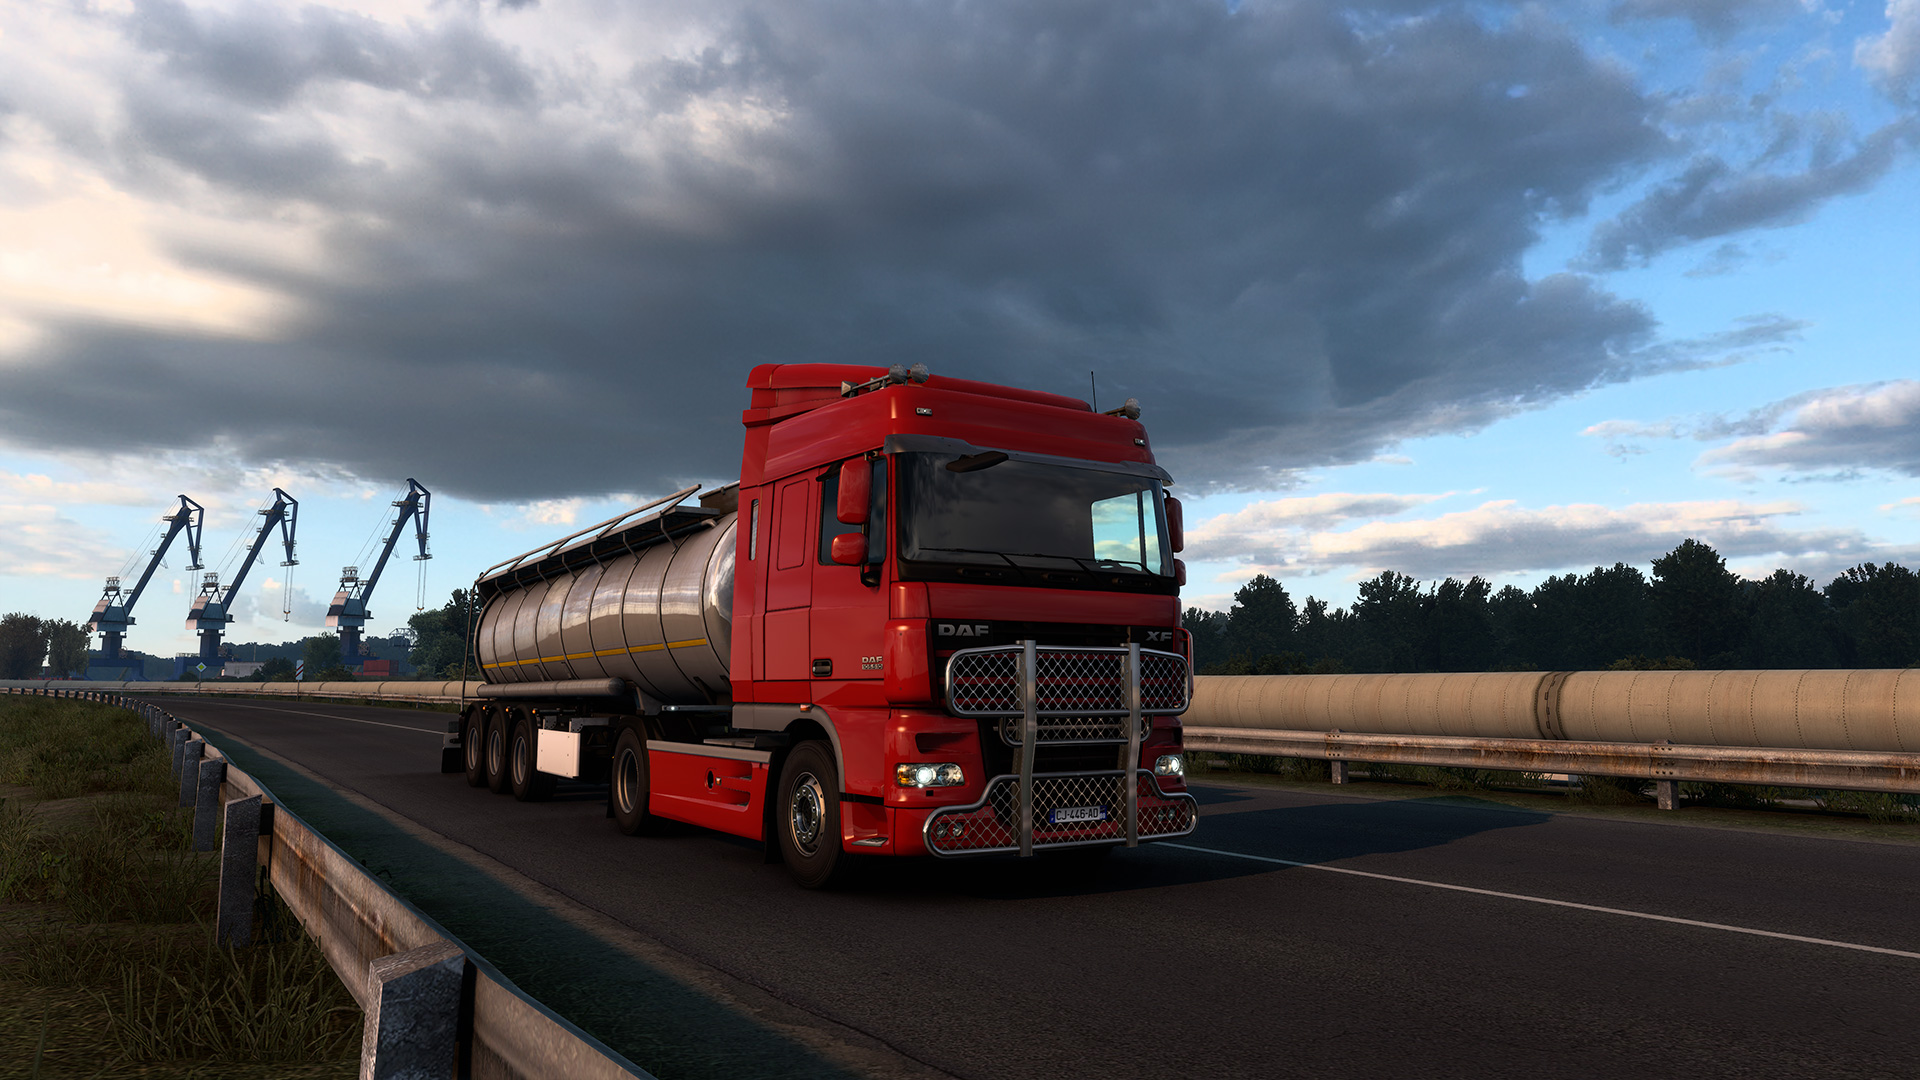 euro truck simulator 2 multiplayer free